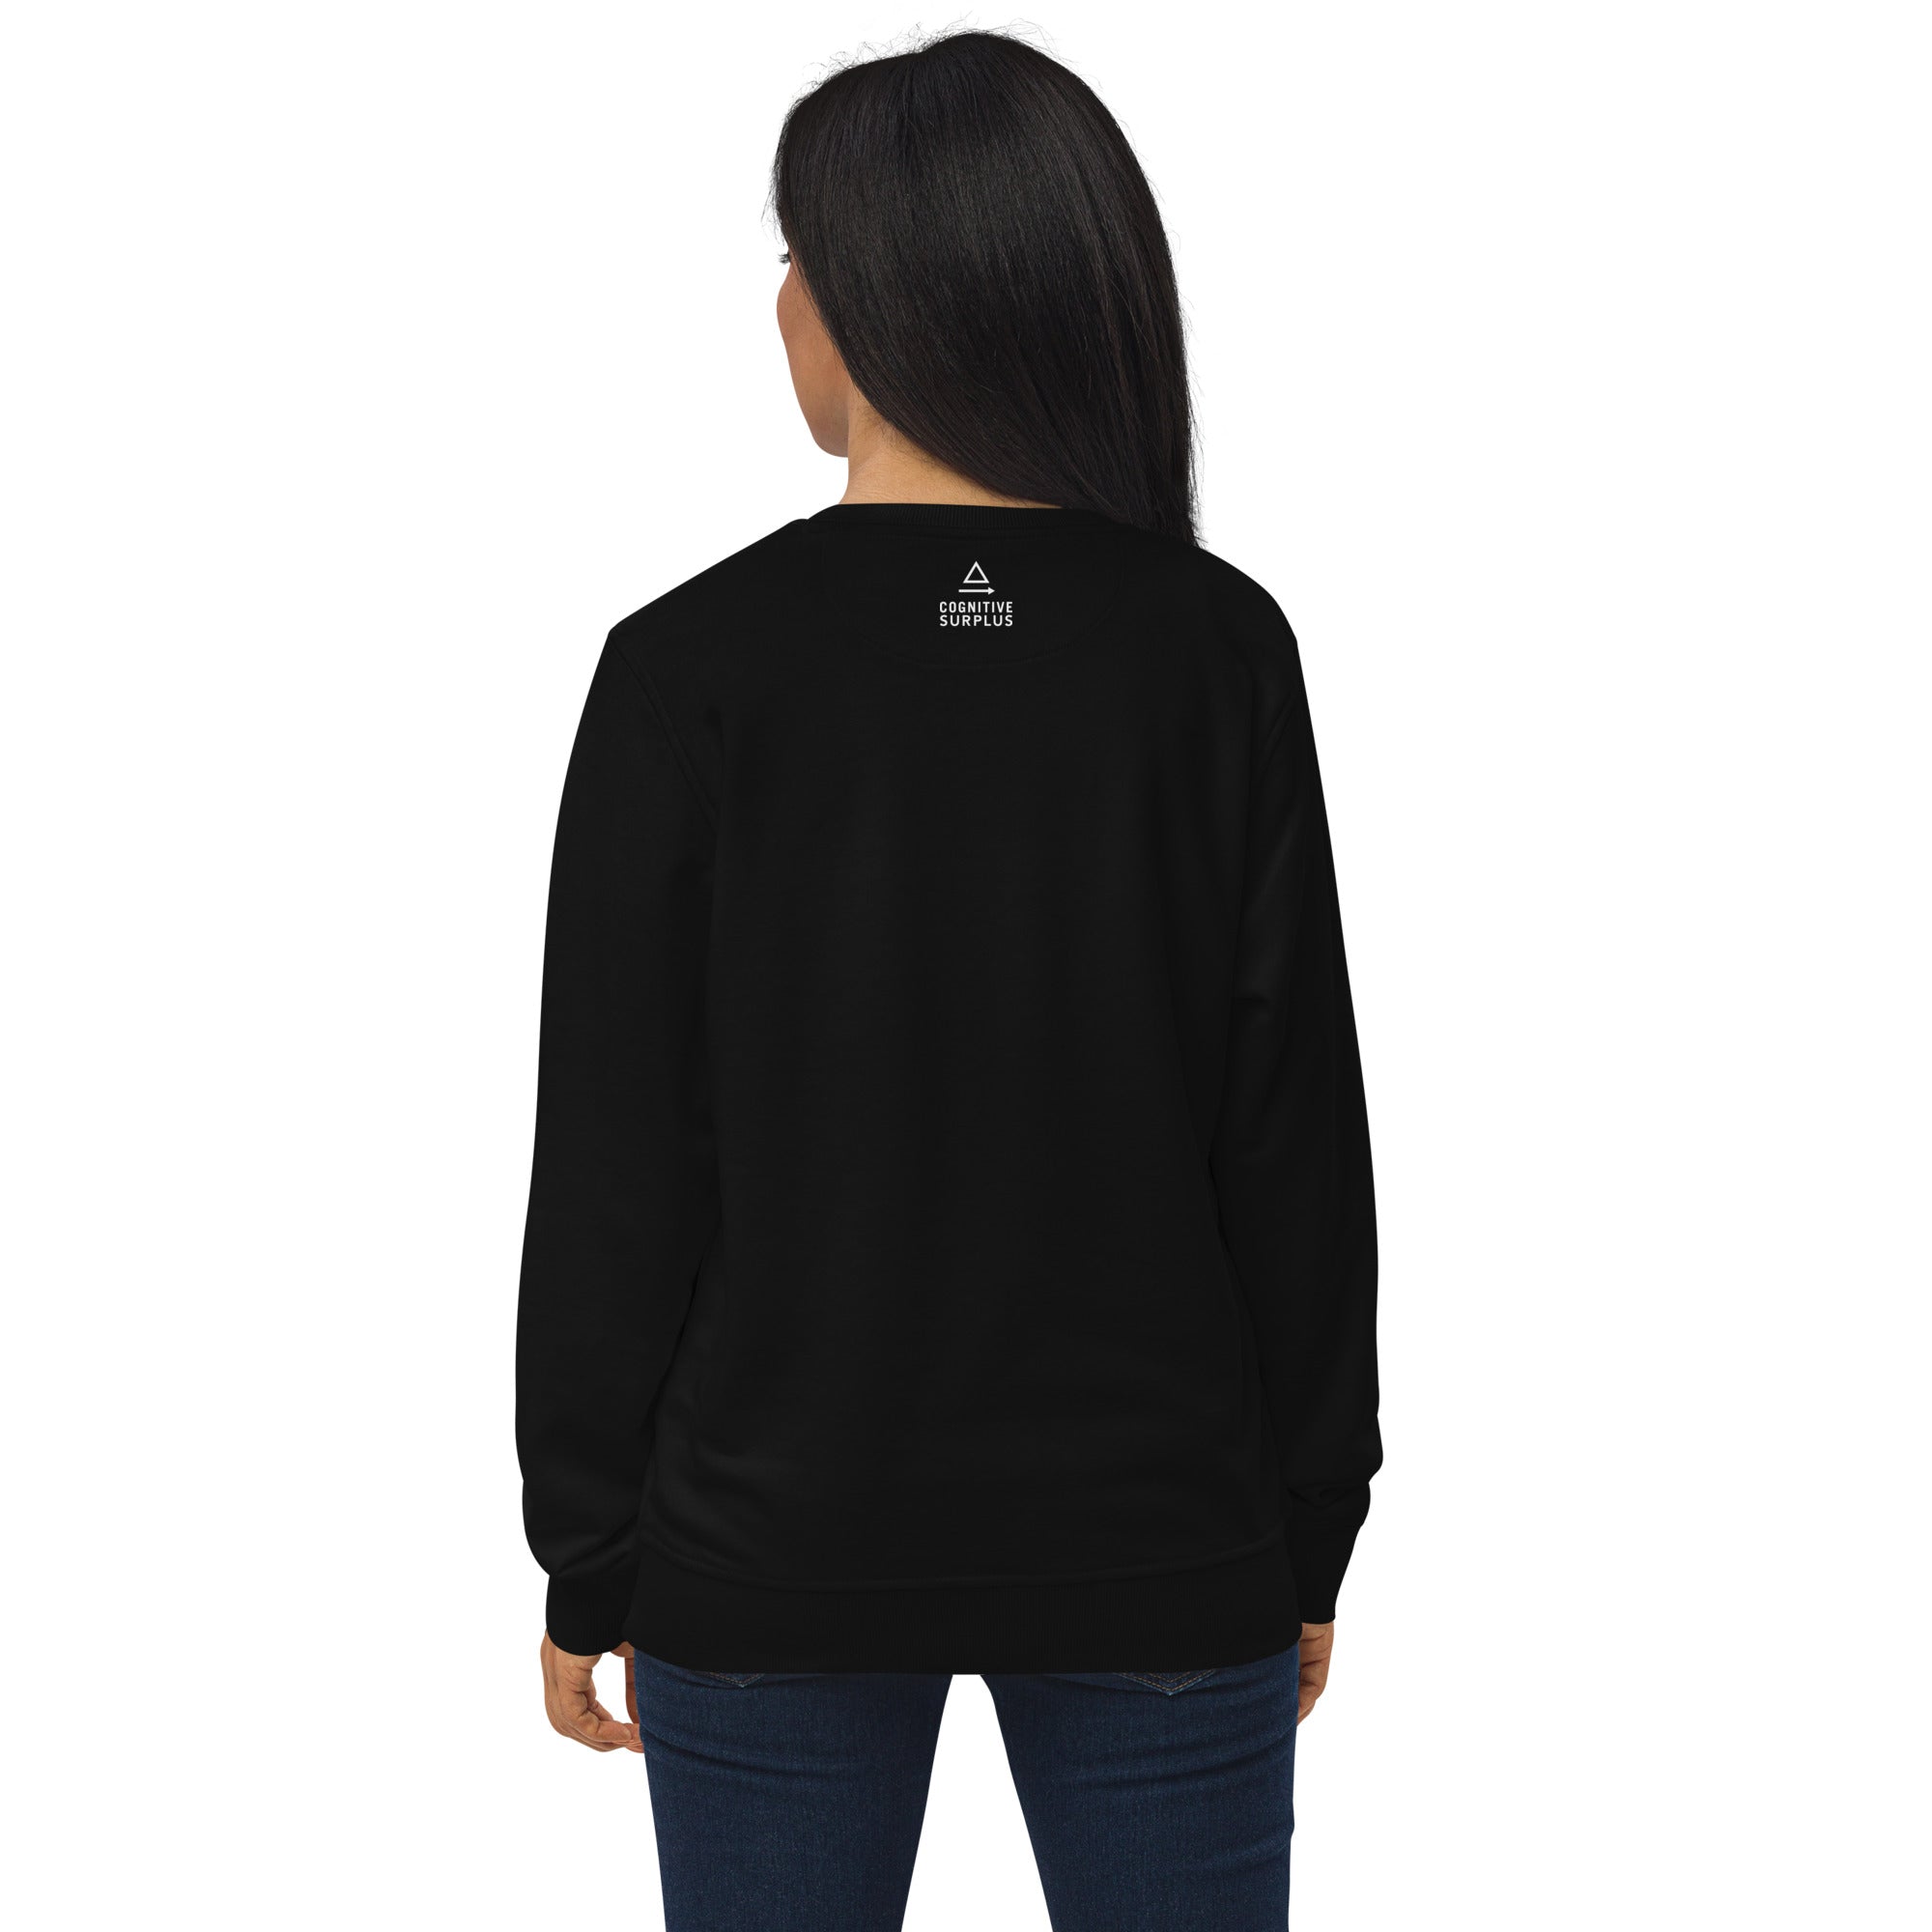 unisex-organic-sweatshirt-black-back-6570c80792fee.jpg